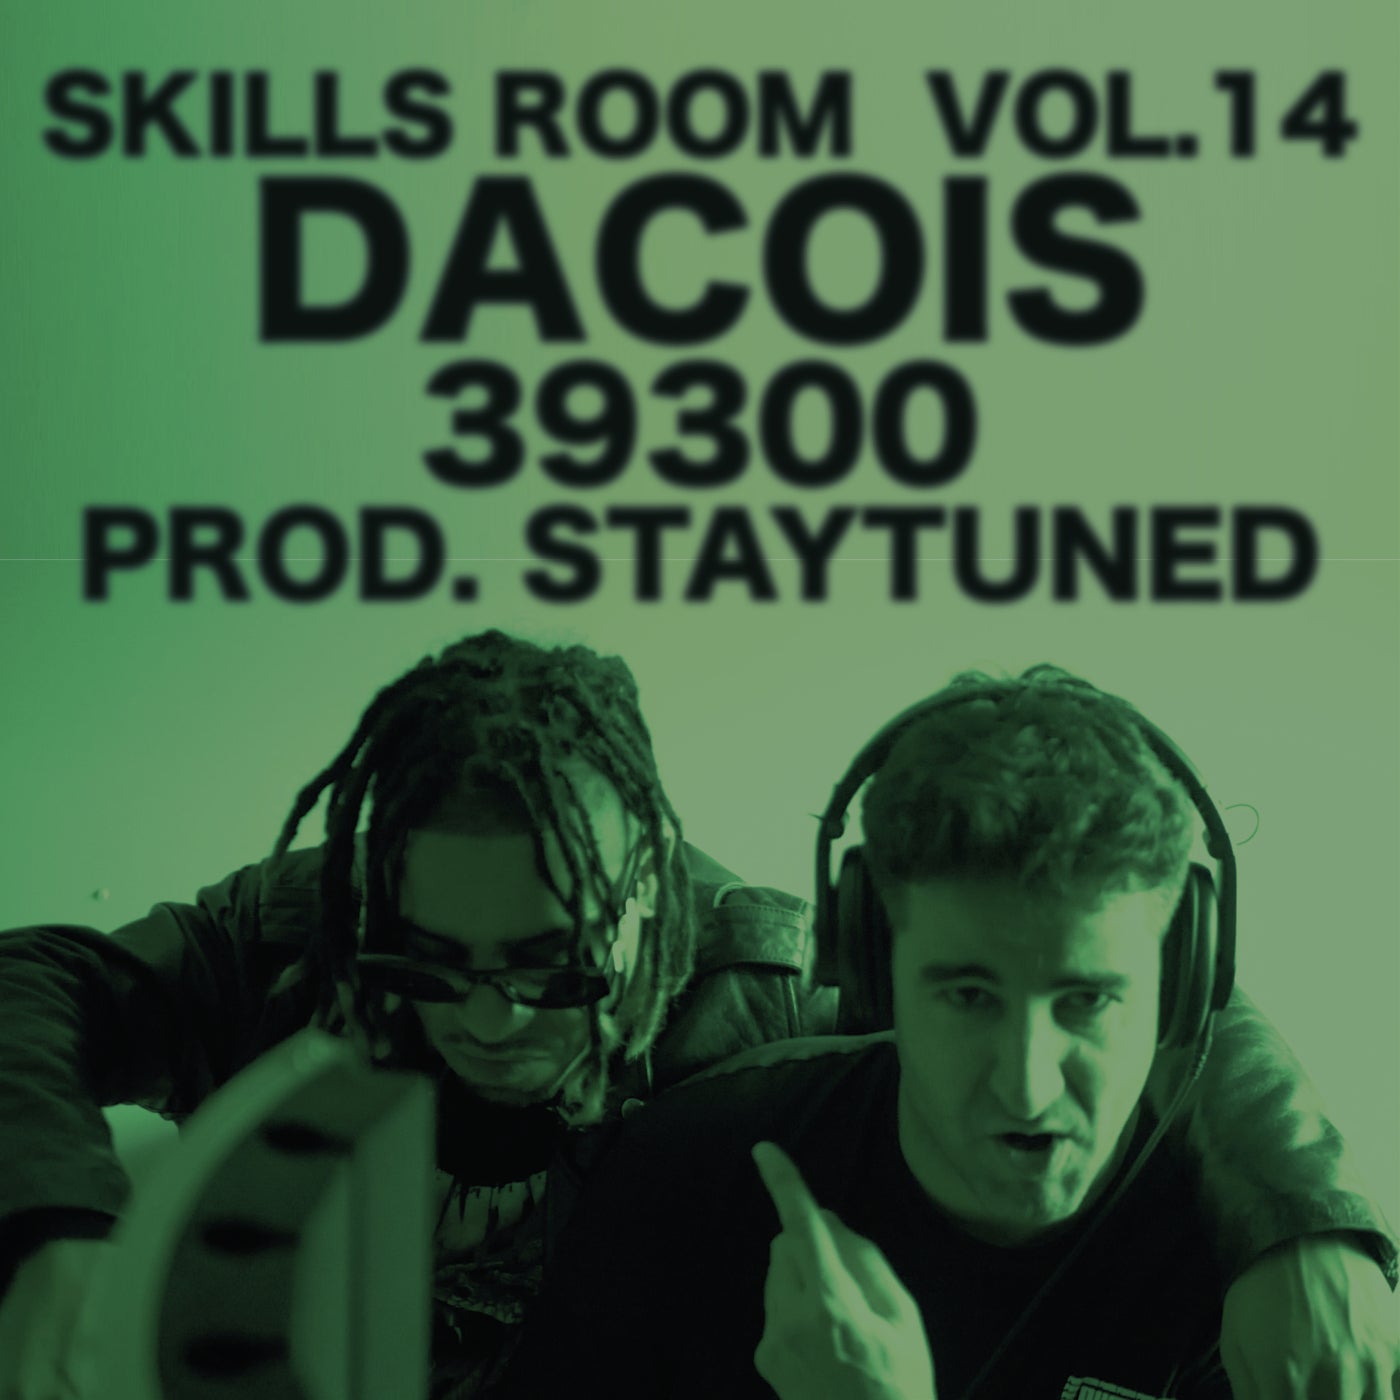 39300 (Skills Room Vol.14)